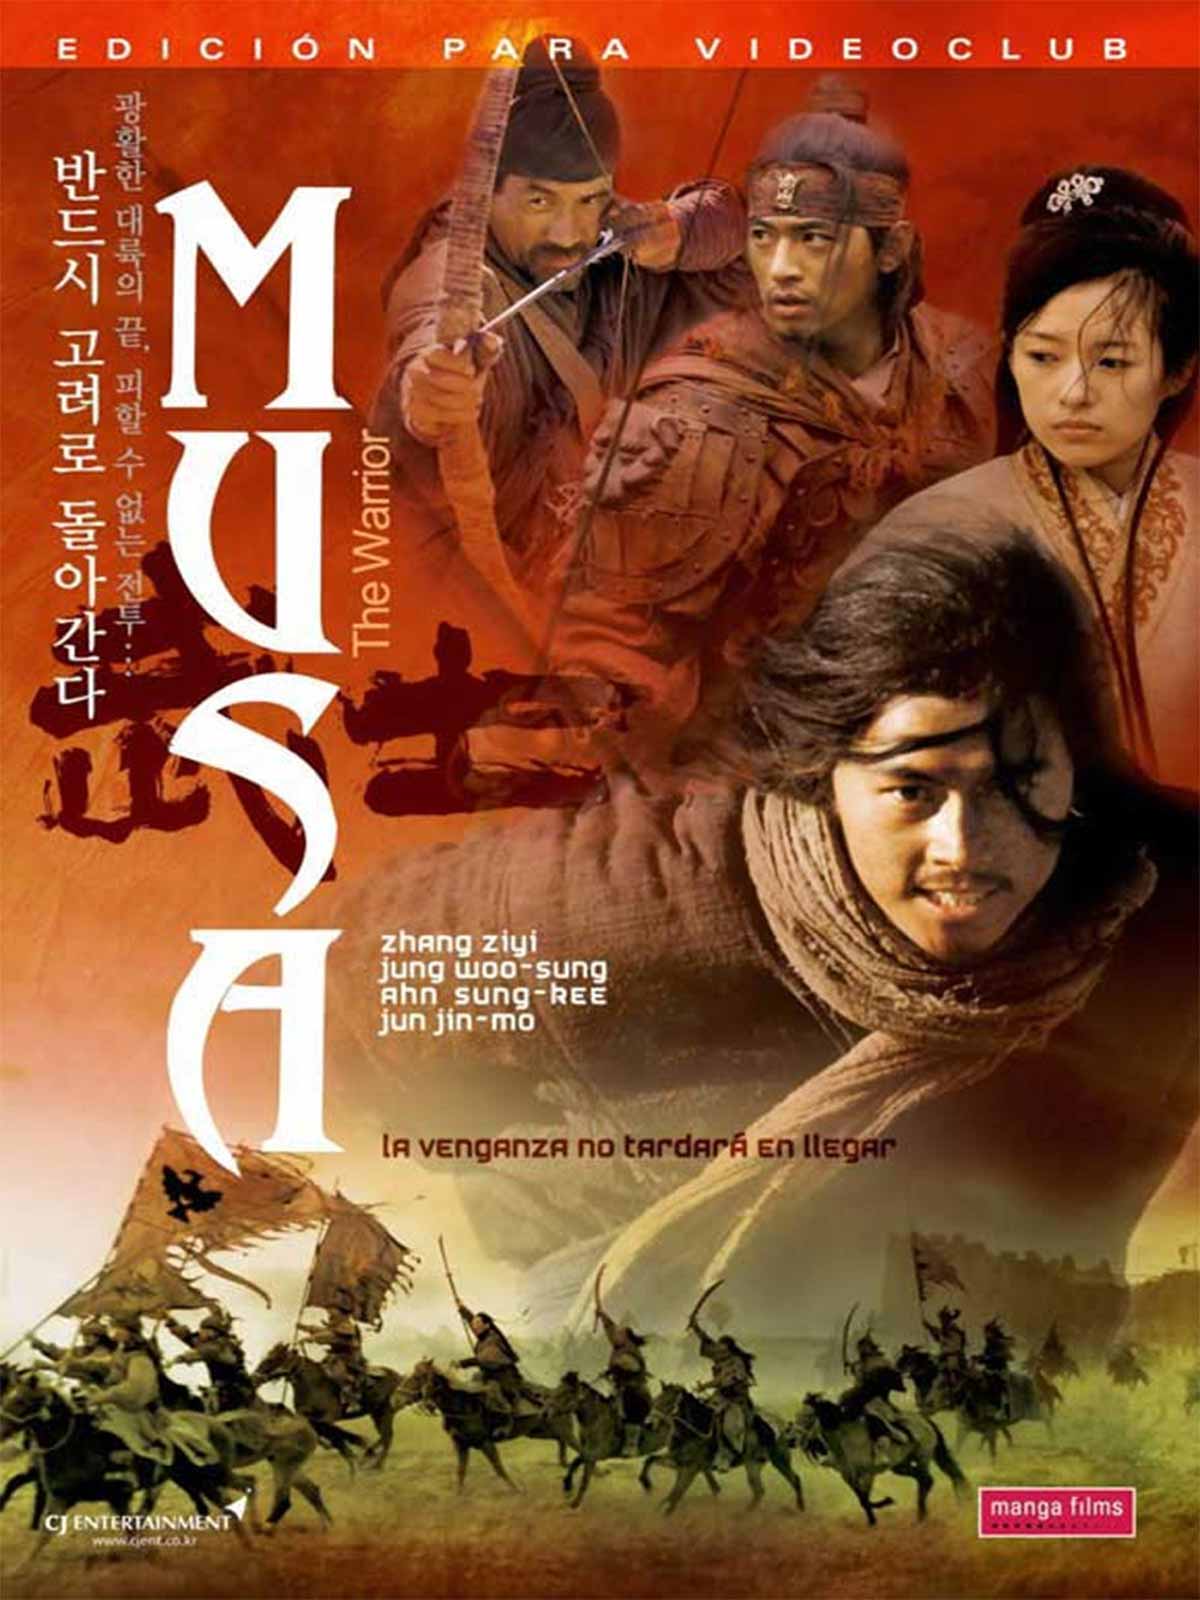 Stiahni si Filmy bez titulků 2001 - Musa - Korean Collection = CSFD 75%